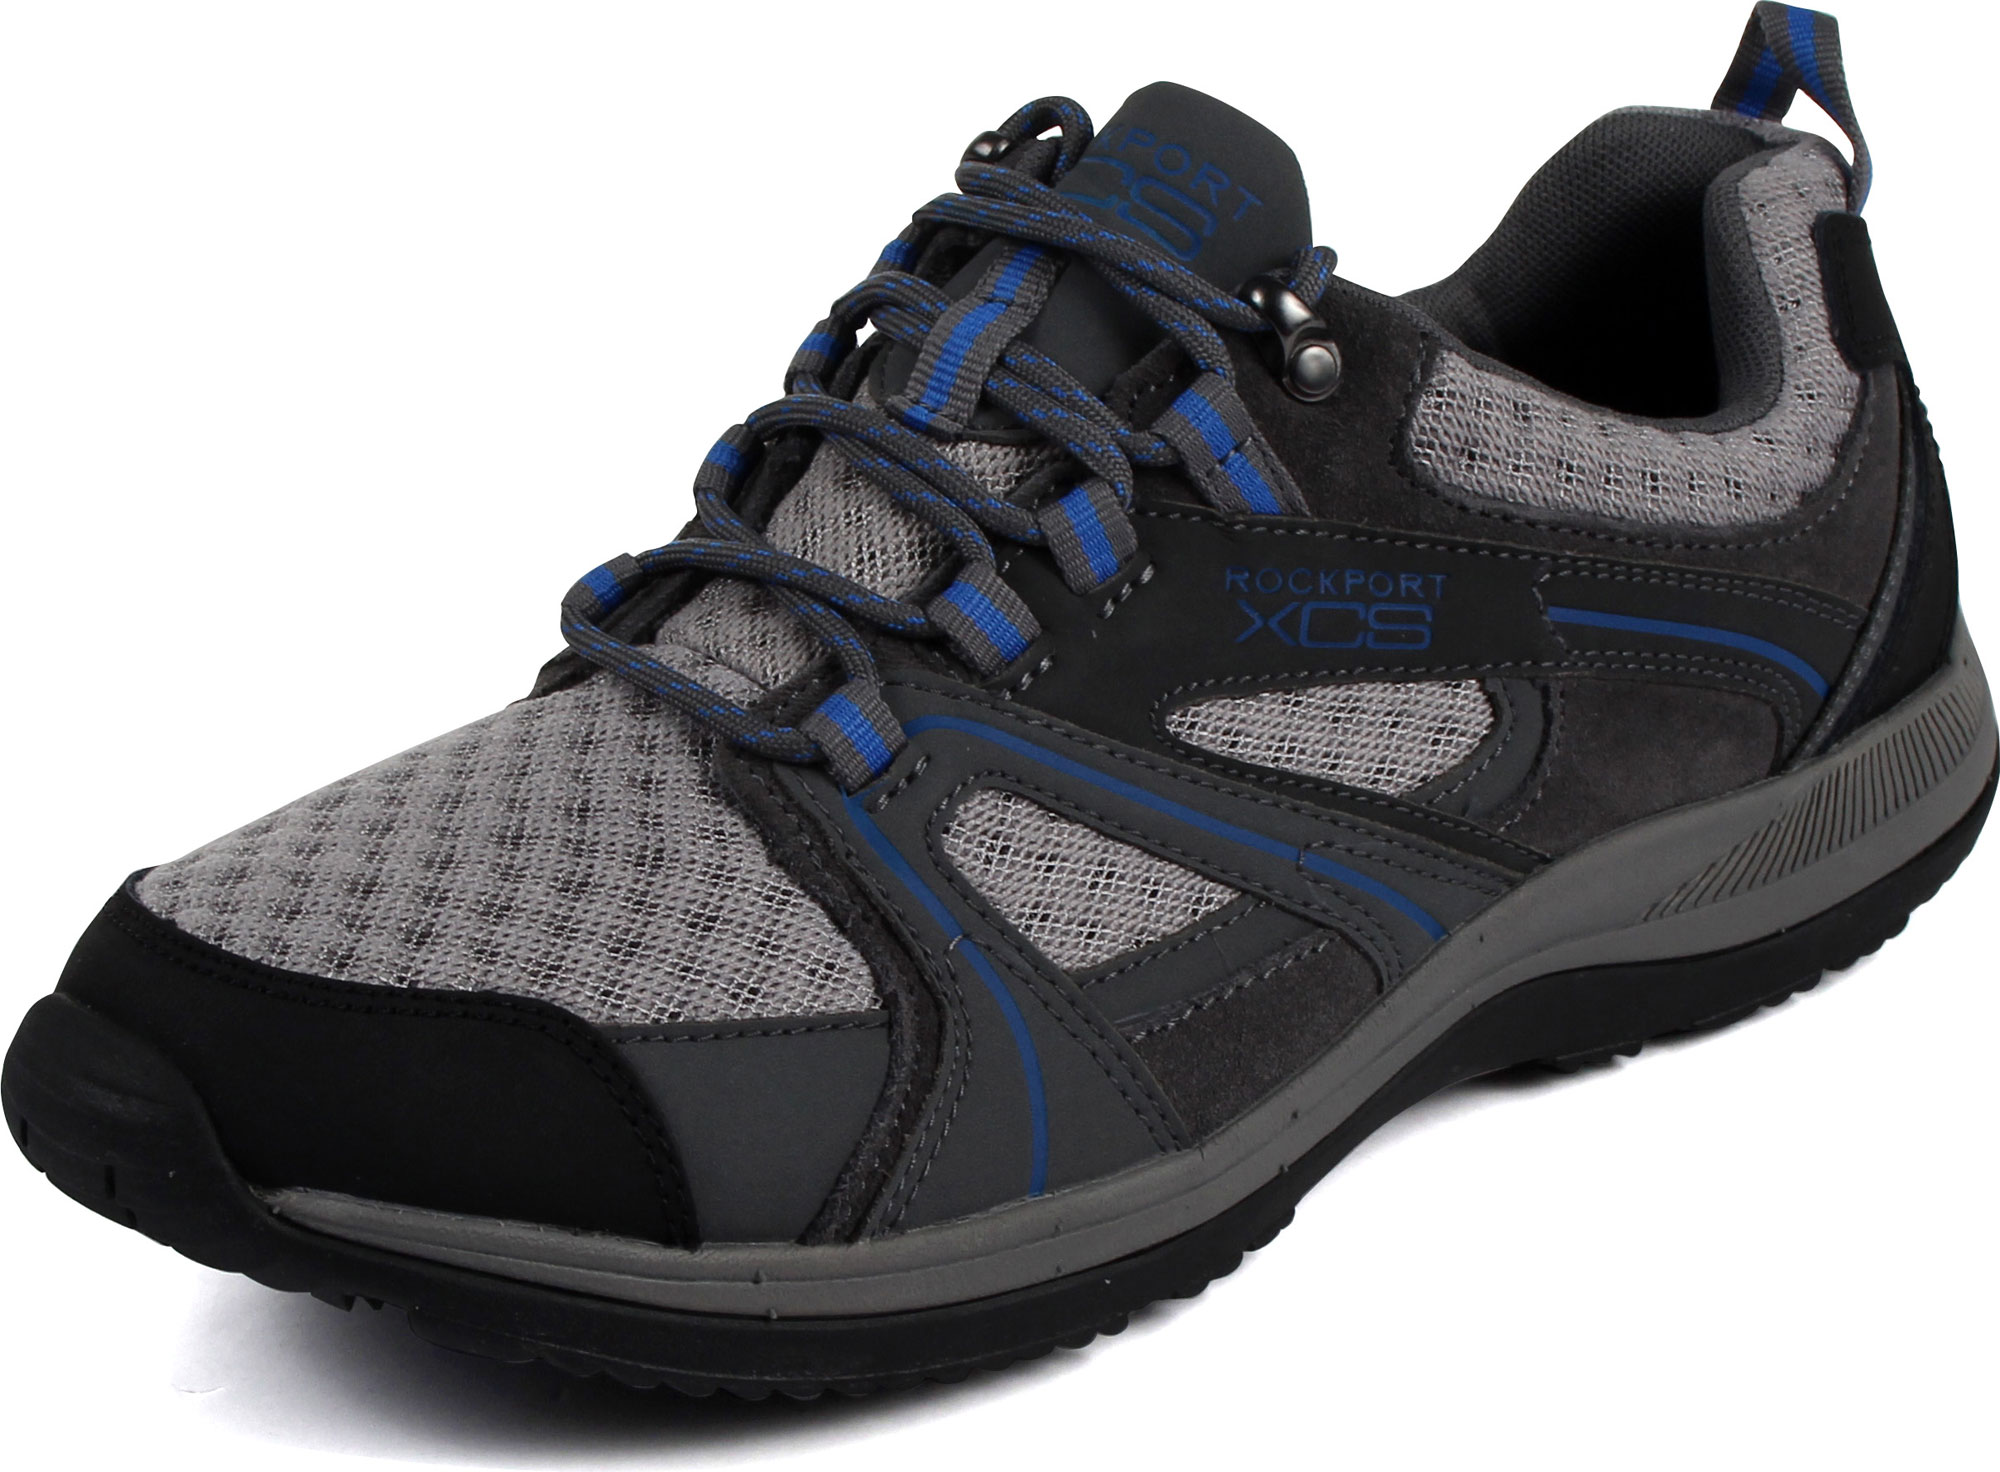 Rockport - Mens Mudguard Web Hiking Shoes